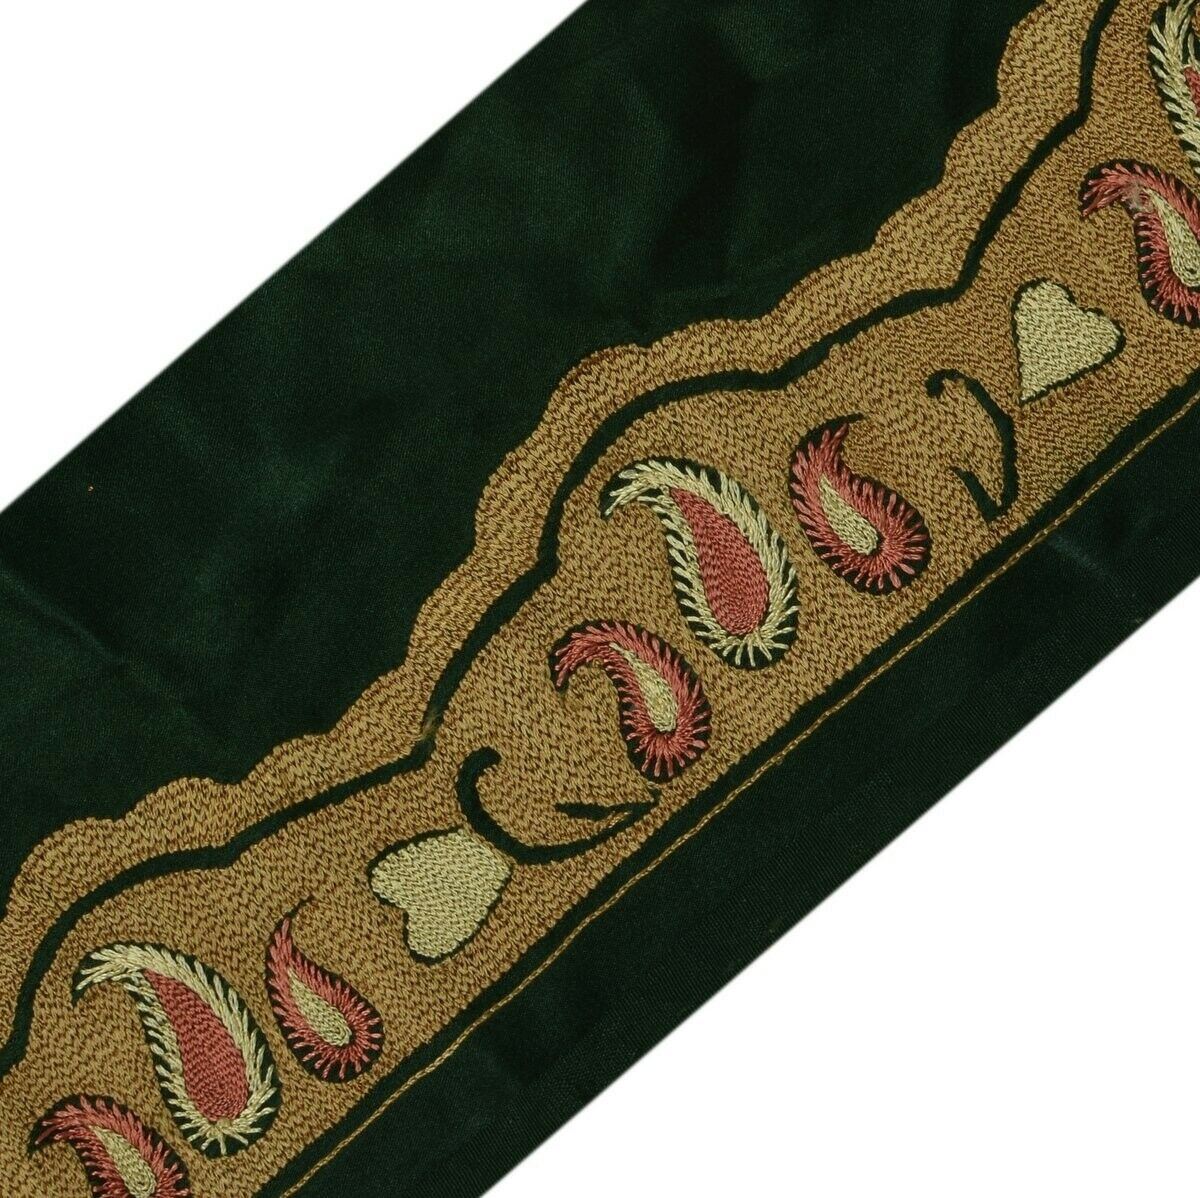 Vintage Sari Border Indian Craft Trim Embroidered Green Sewing Ribbon Lace